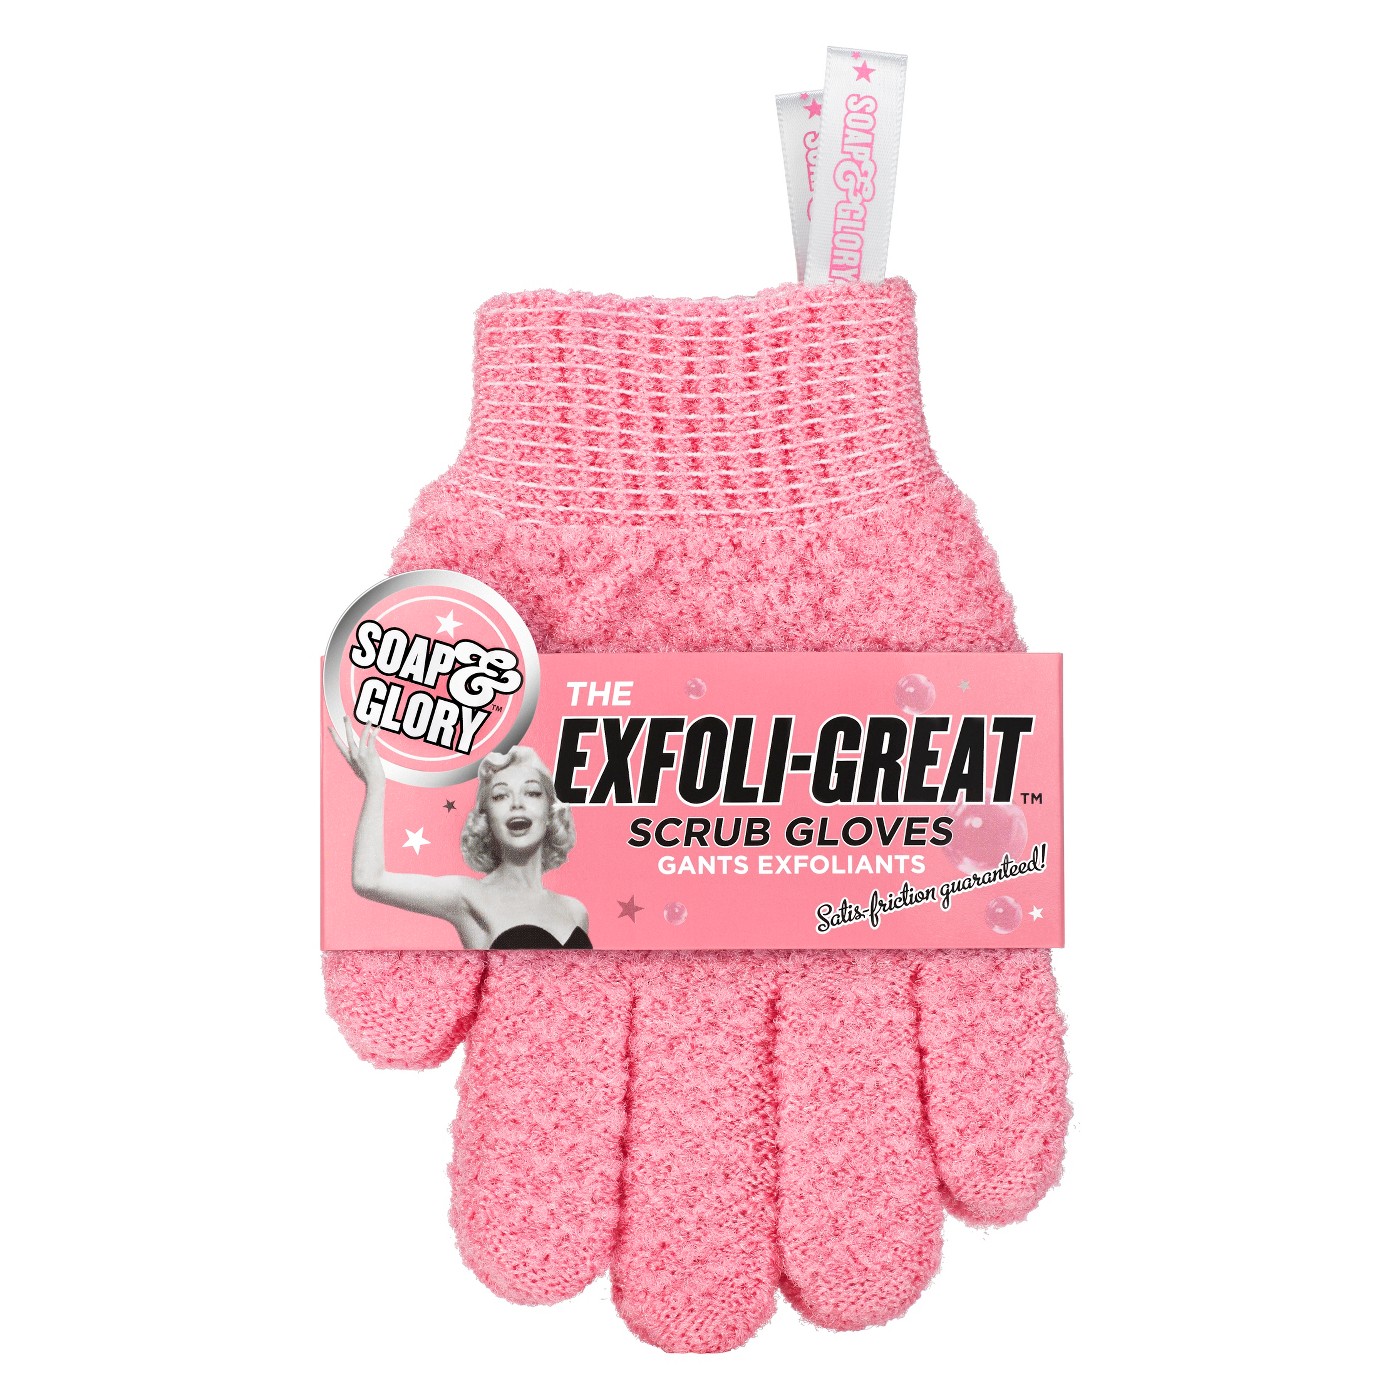 Soap & Glory Exfoli-Great Scrub Gloves - image 1 of 3